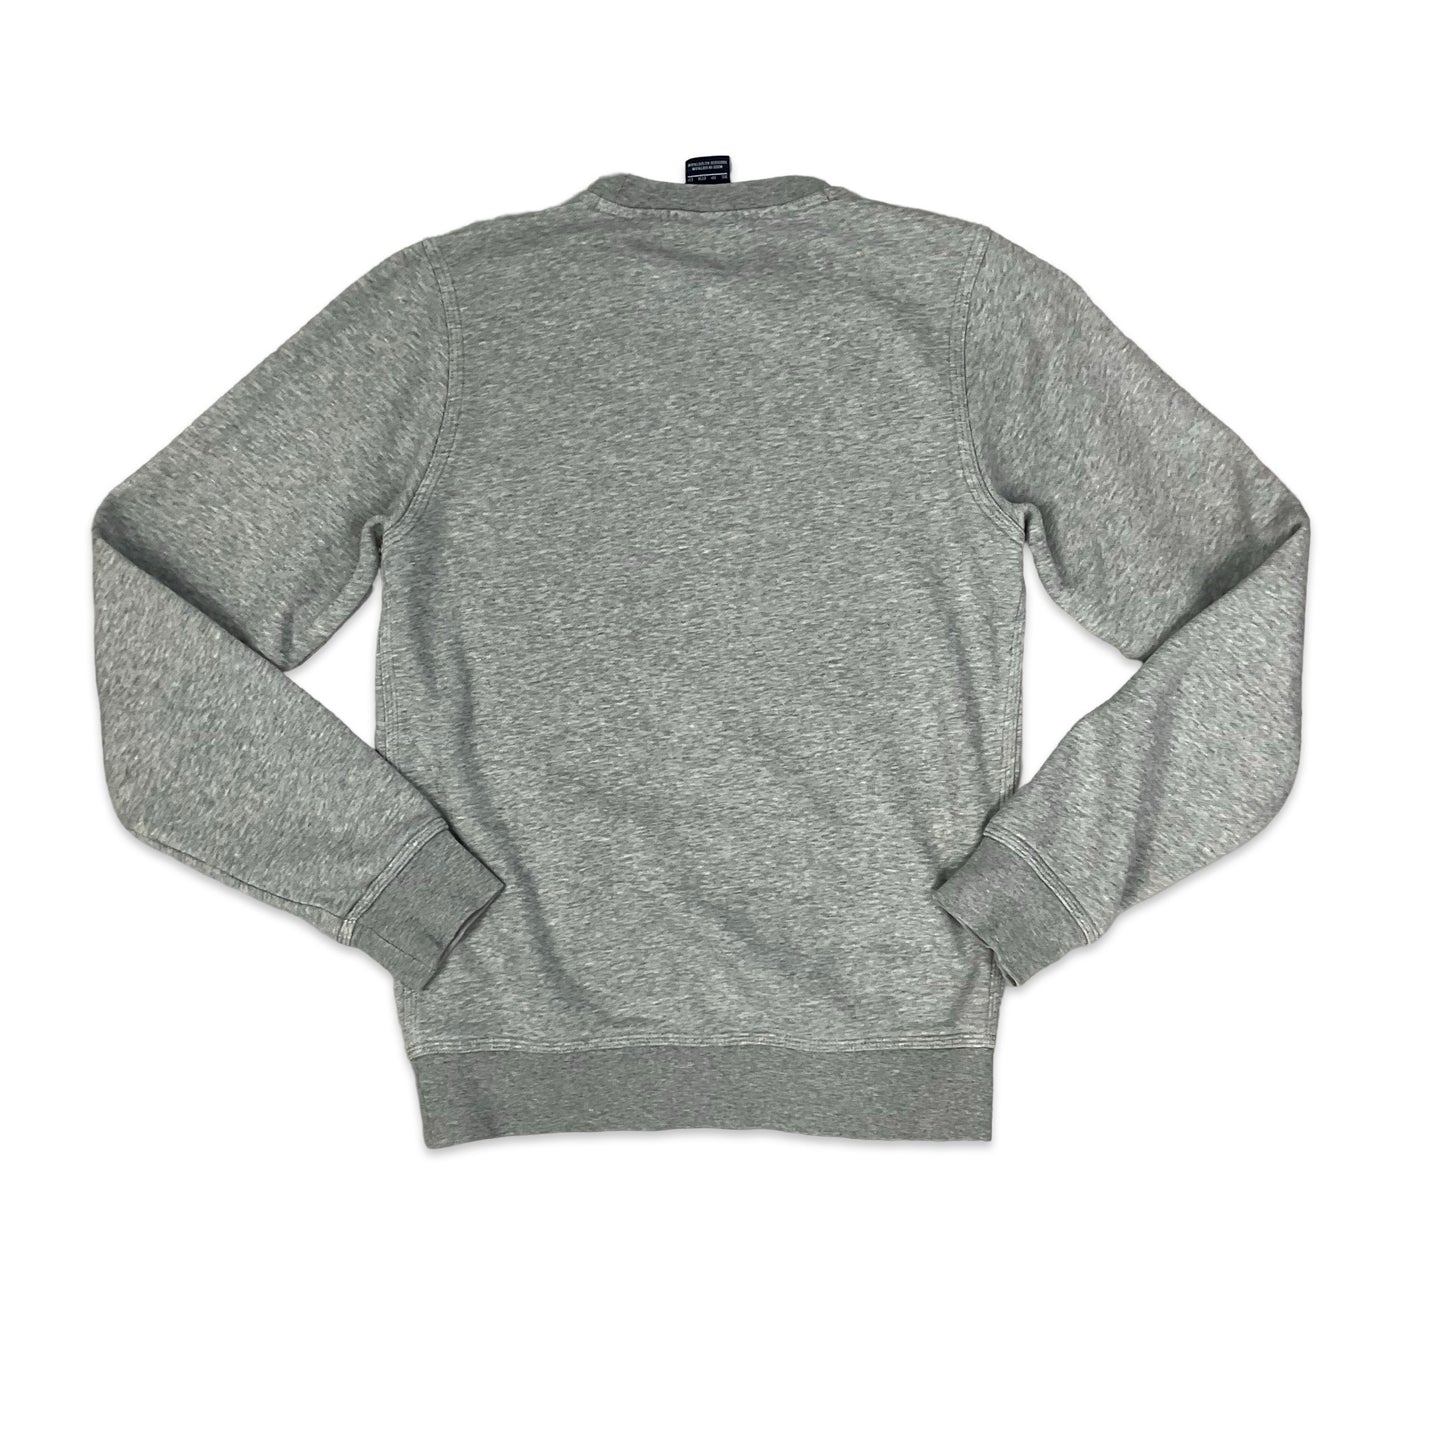 Nike Grey Crew Neck Sweatshirt XS S